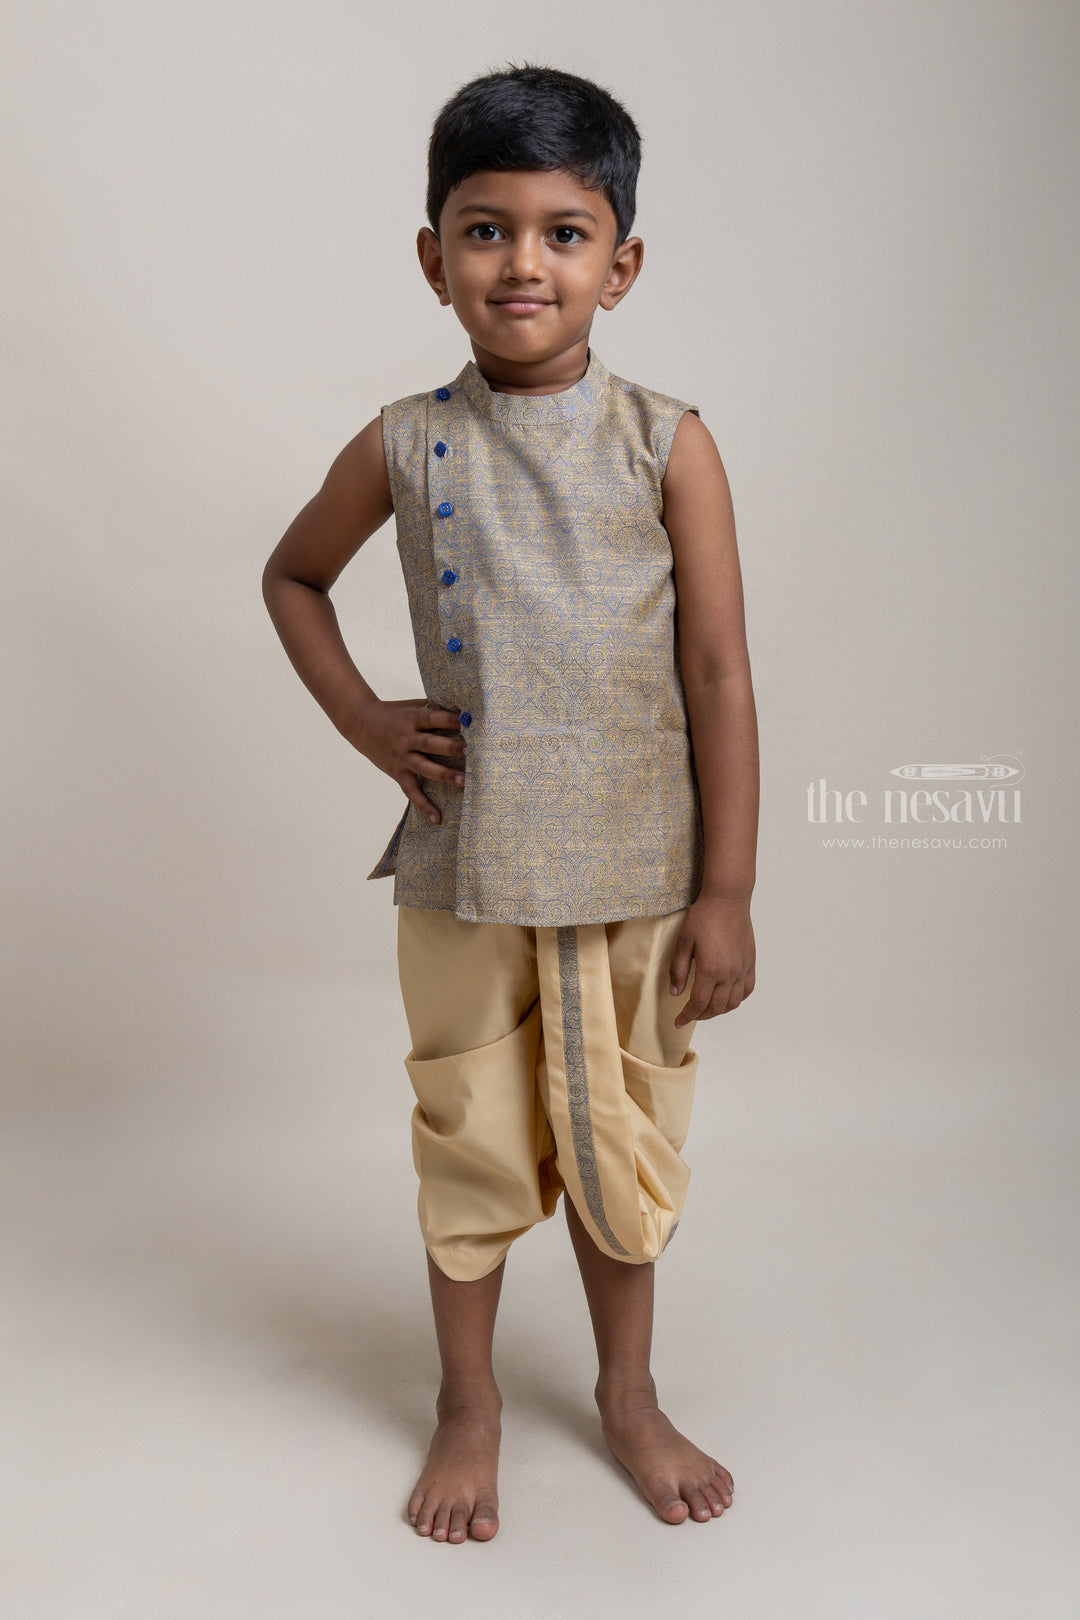 The Nesavu Boys Dothi Set Premium Designer Gray Ethnic kurta With Contrast Dhoti For Boys Nesavu 12 (3M) / Gray / Dupioni Silk BES294A-12 Trendy Premium Wear For Boys | Ethnic Wear Collection | The Nesavu